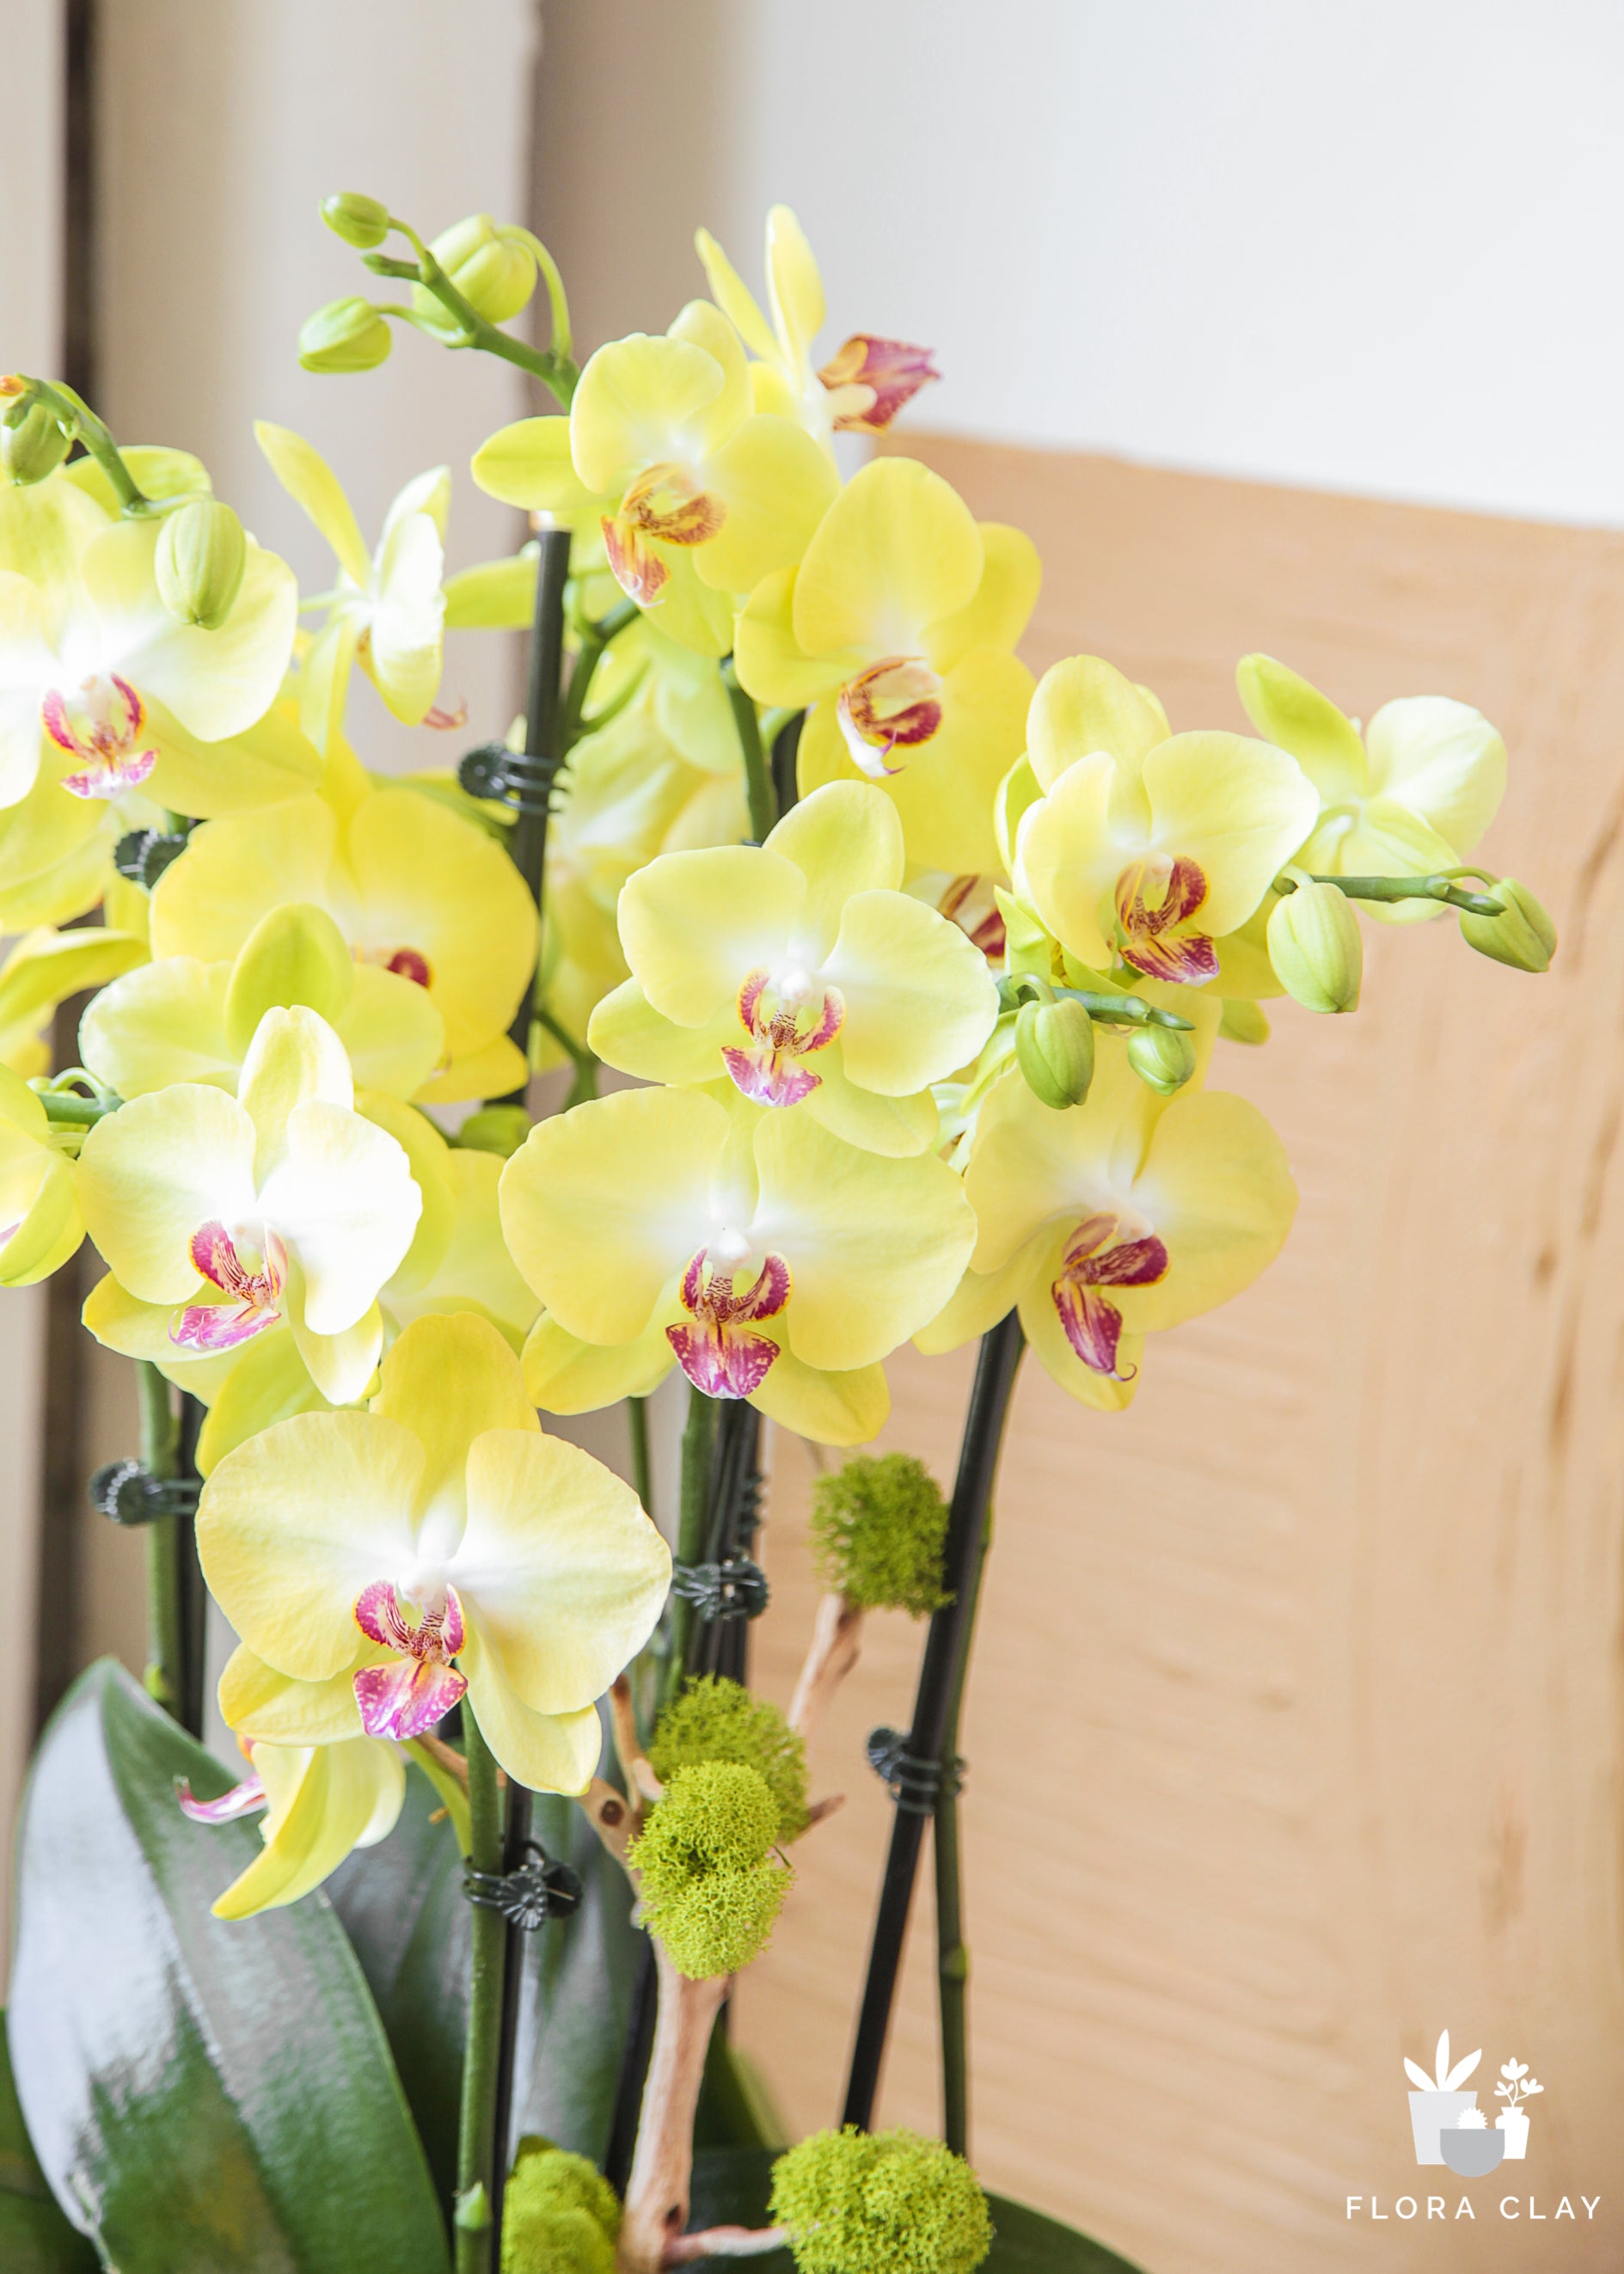 zesty-orchid-arrangement-floraclay-3.jpg